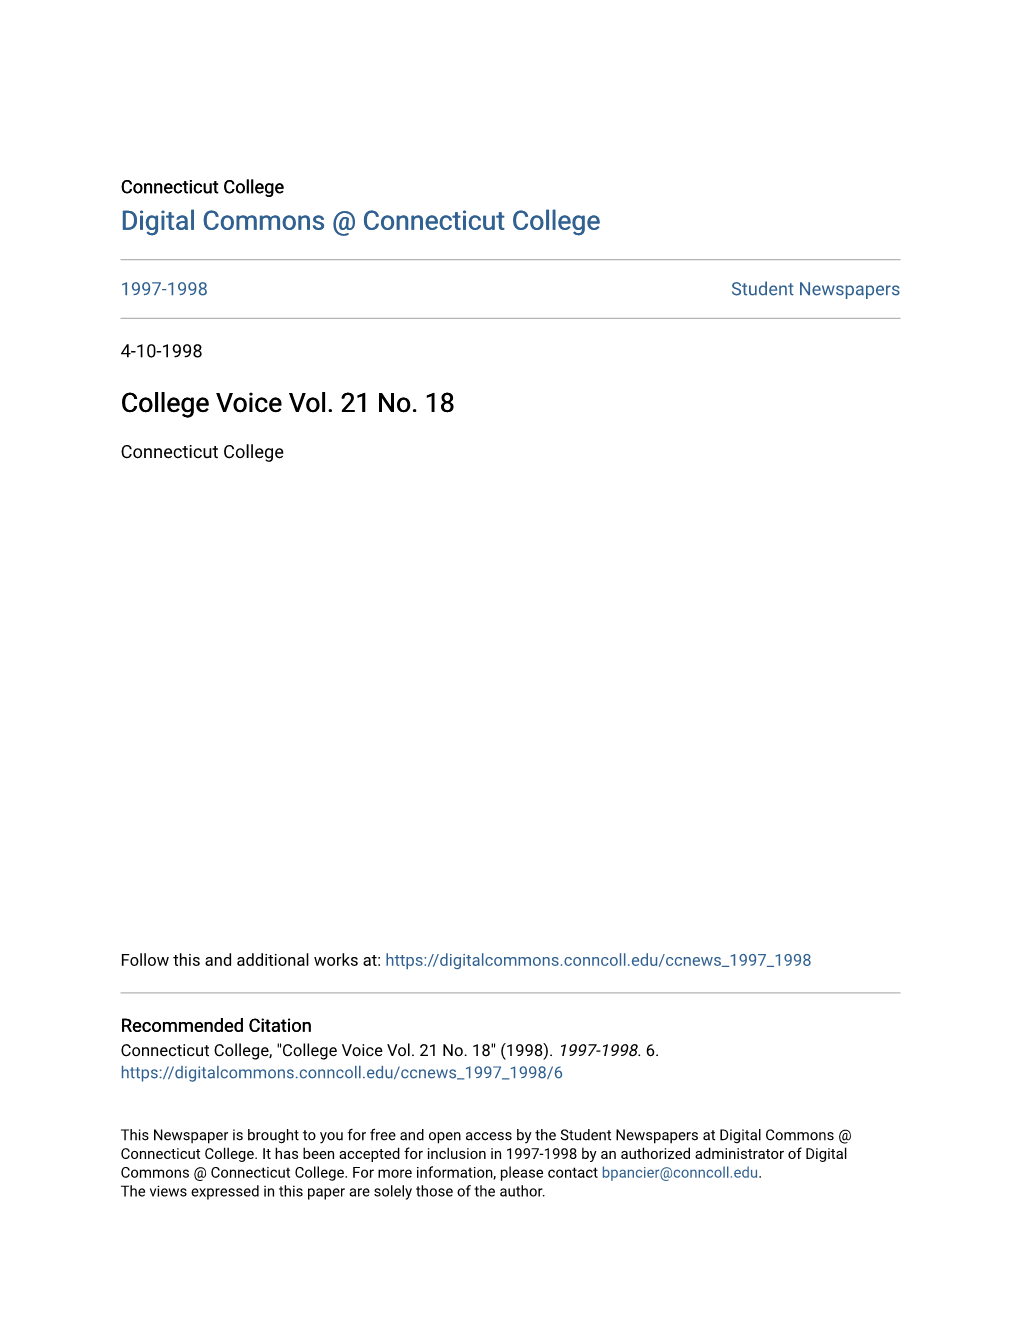 College Voice Vol. 21 No. 18